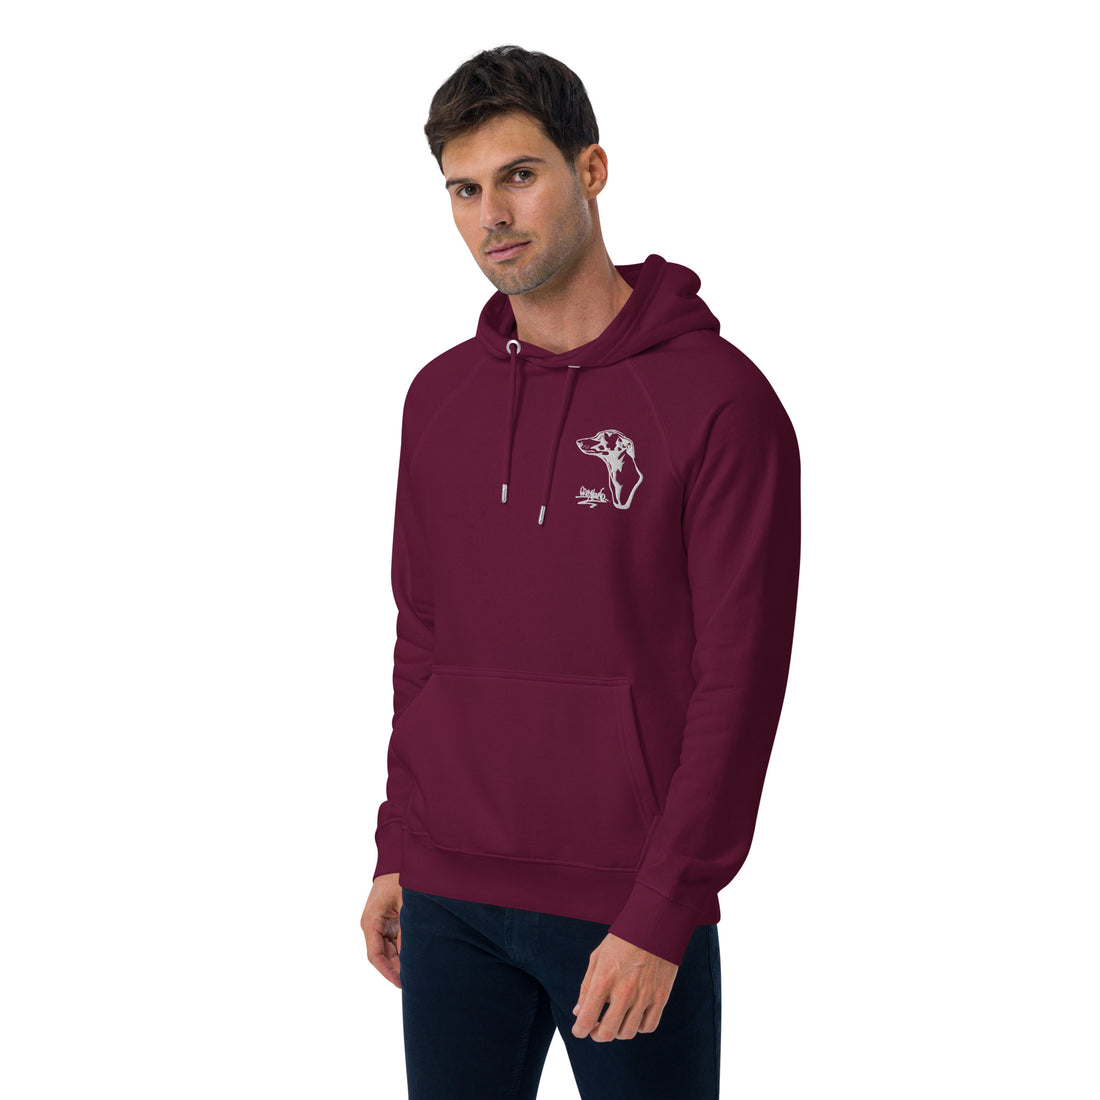 Unisex eco raglan hoodie Greyhound